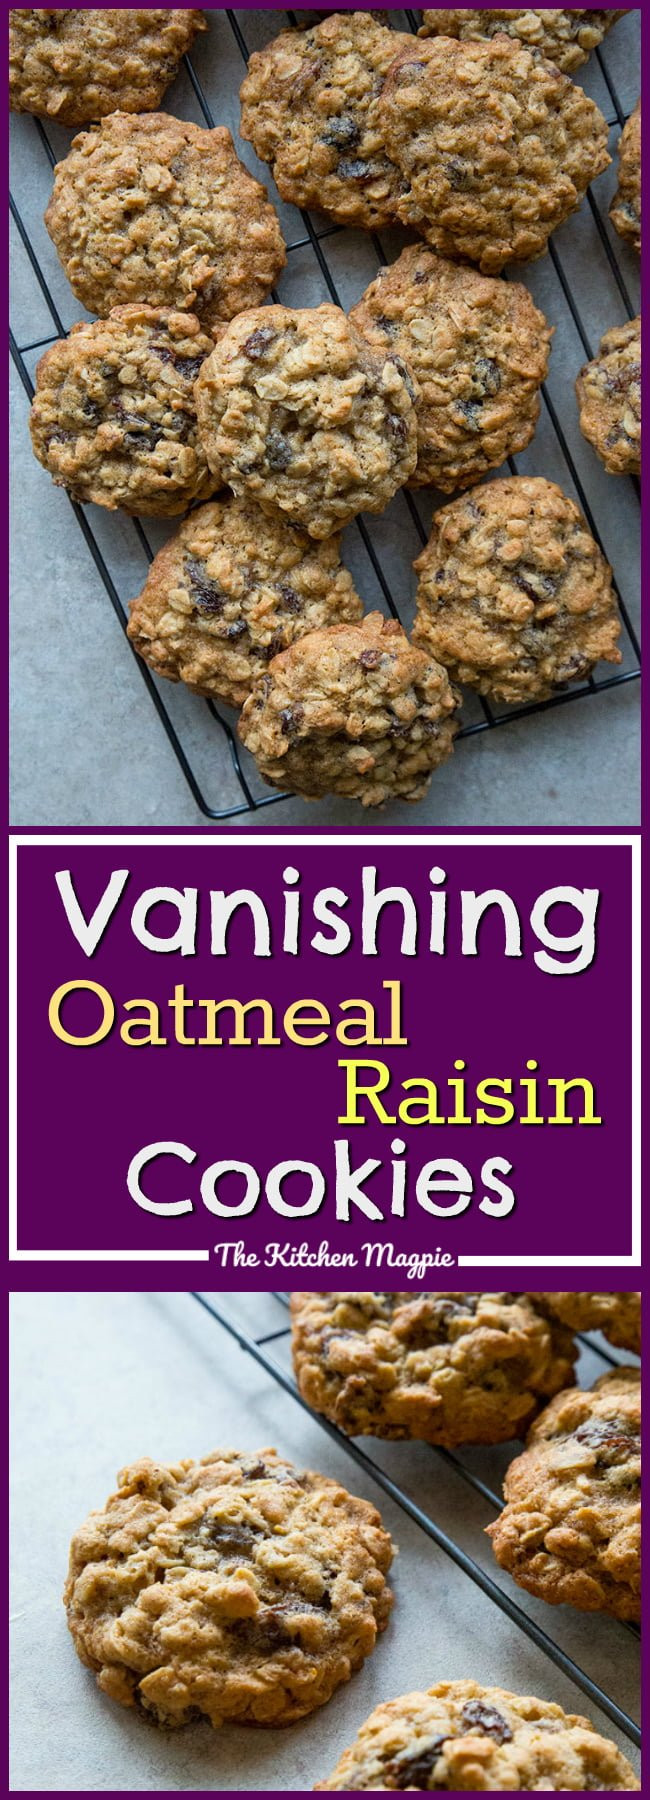 Quaker Oats Oatmeal Cookies
 Dad s Vanishing Oatmeal Raisin Cookies Right f the